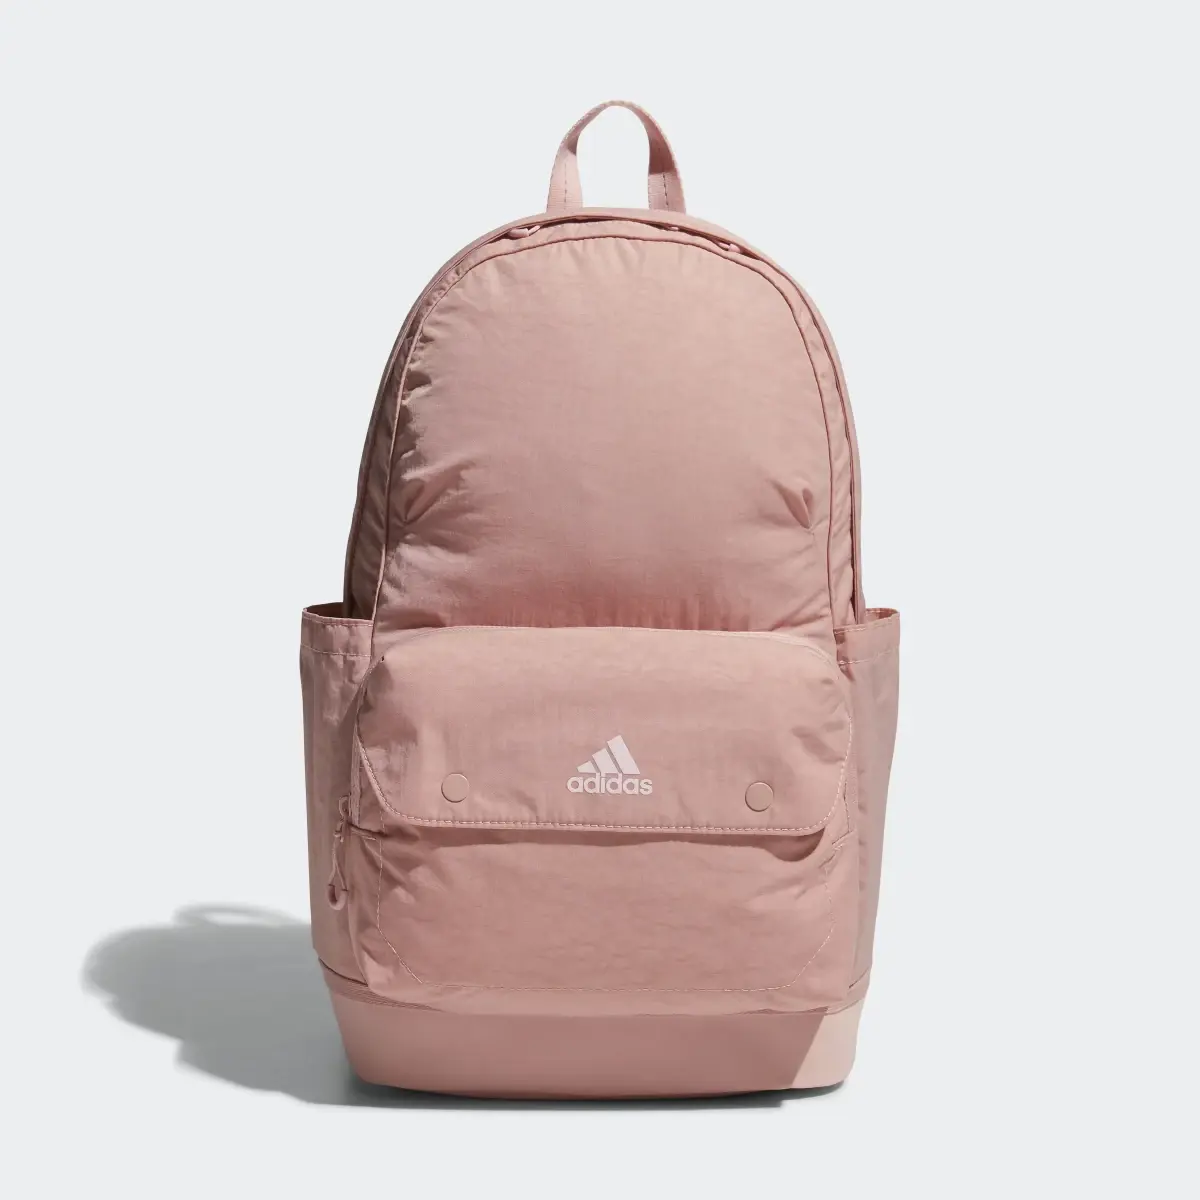 Adidas Backpack. 2